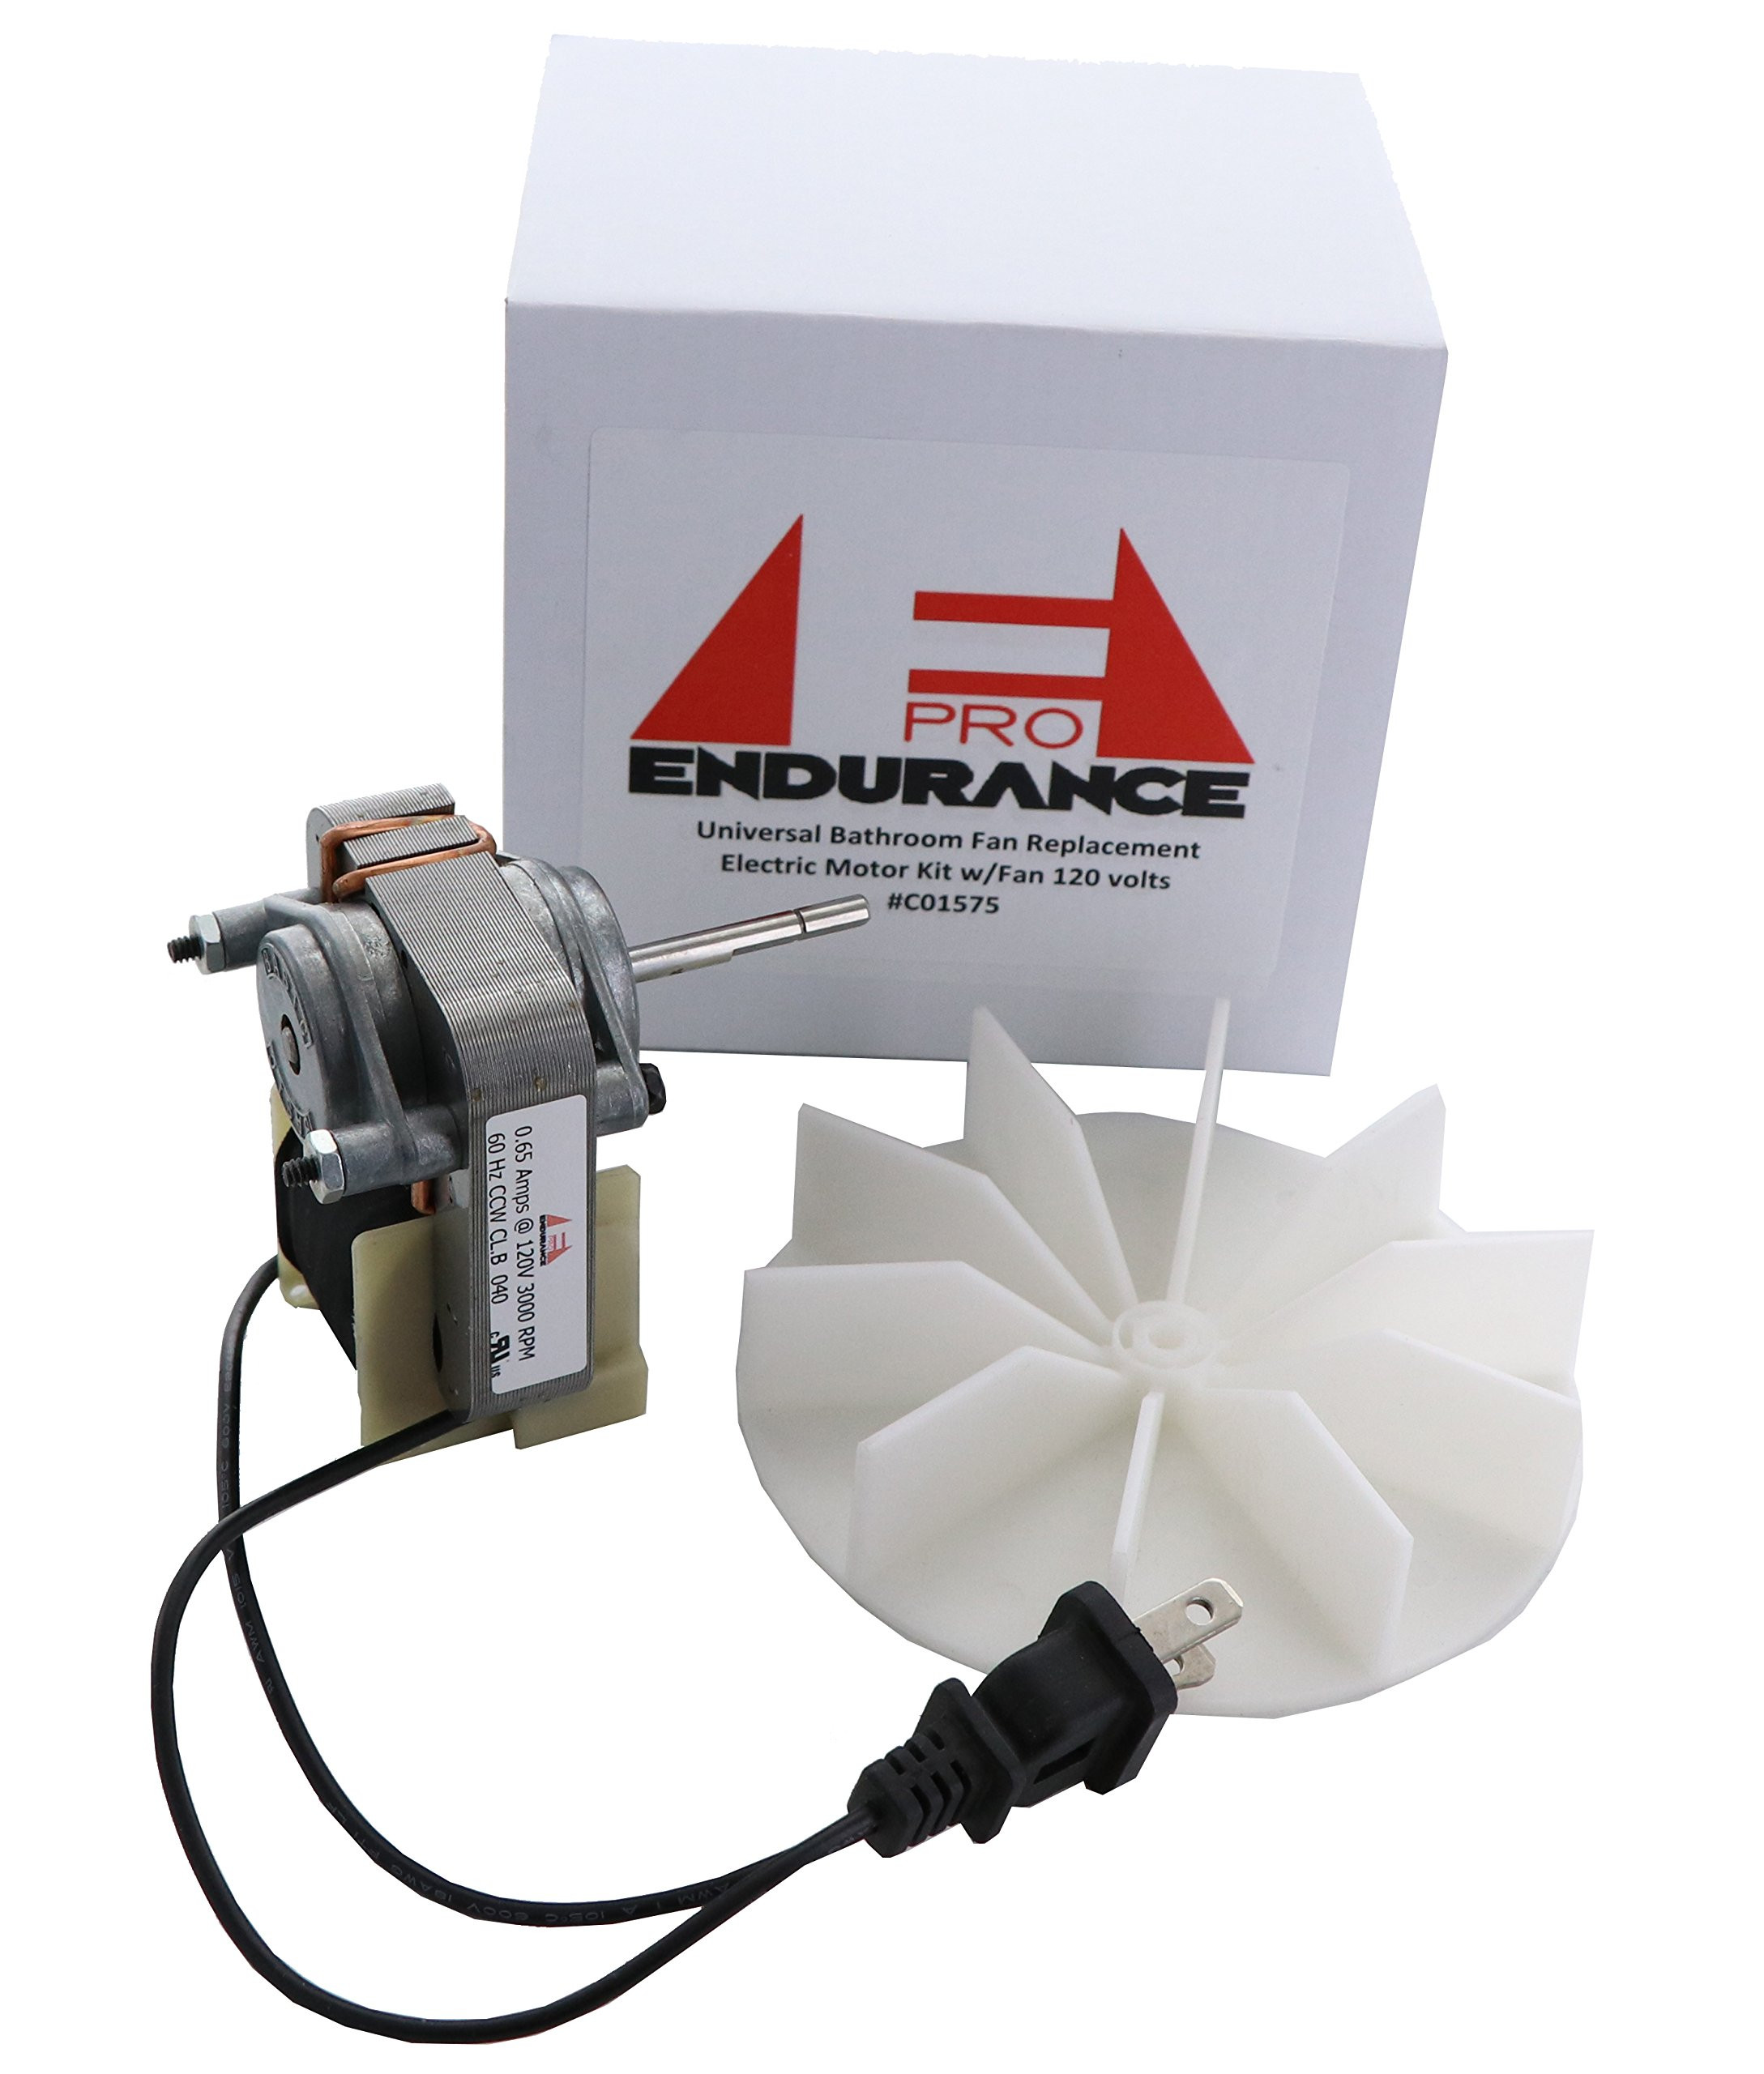 Bathroom Exhaust Fan Motor Replacement
 Best Rated in Electric Motors & Helpful Customer Reviews